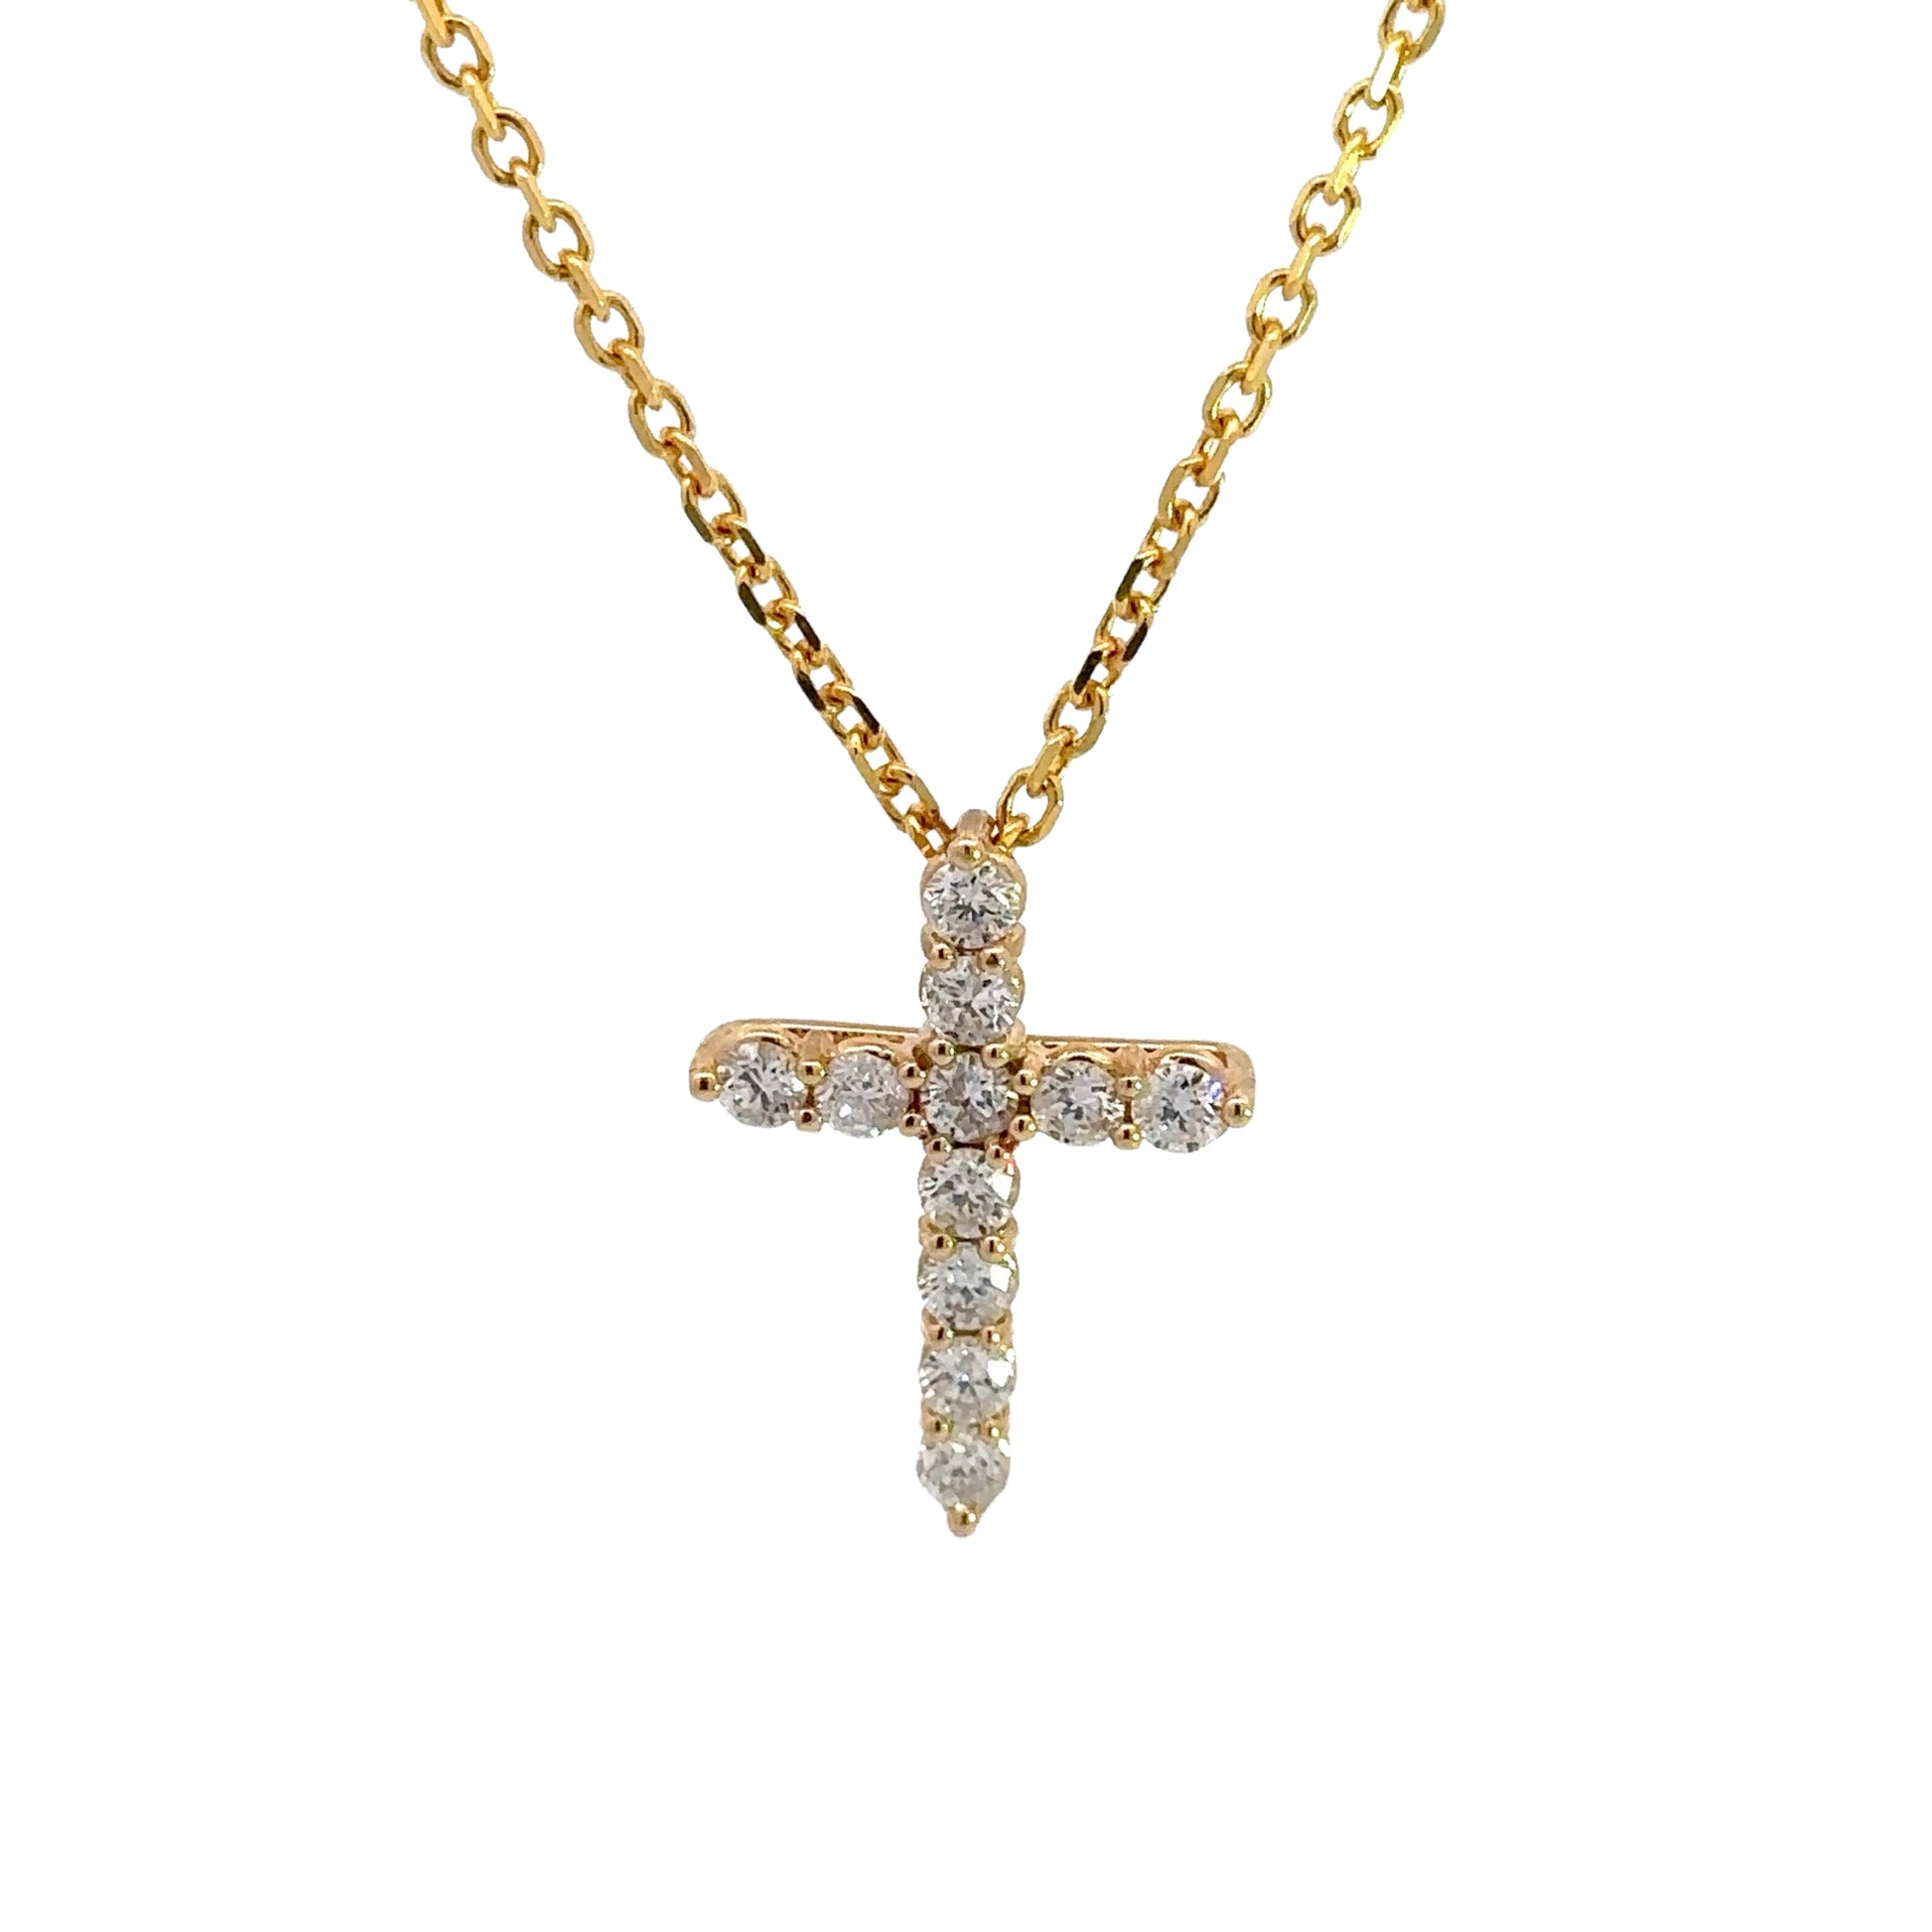 Front of diamond cross necklace with 11 round diamonds